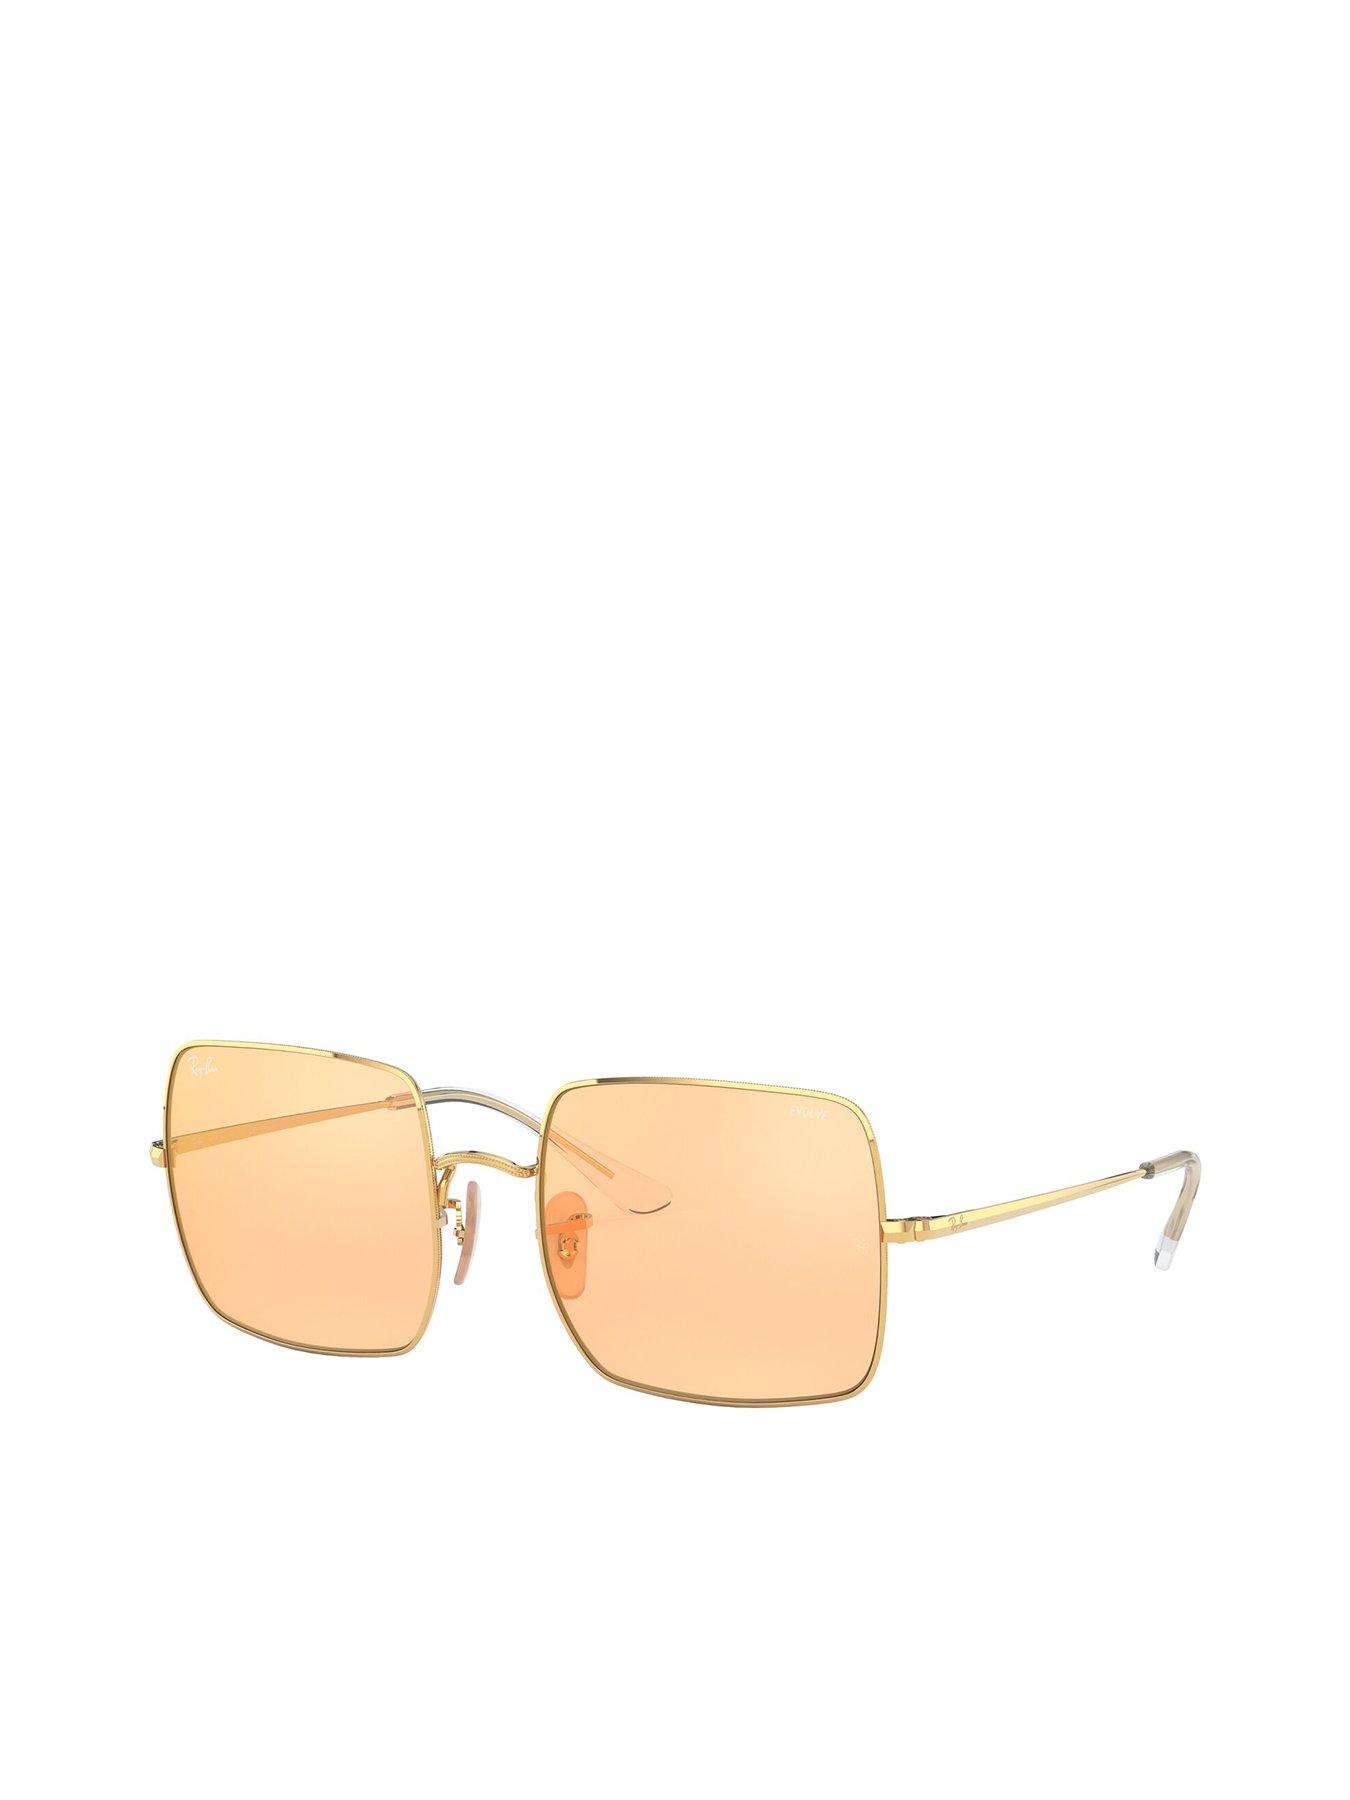  Square Sunglasses - Shiny Gold